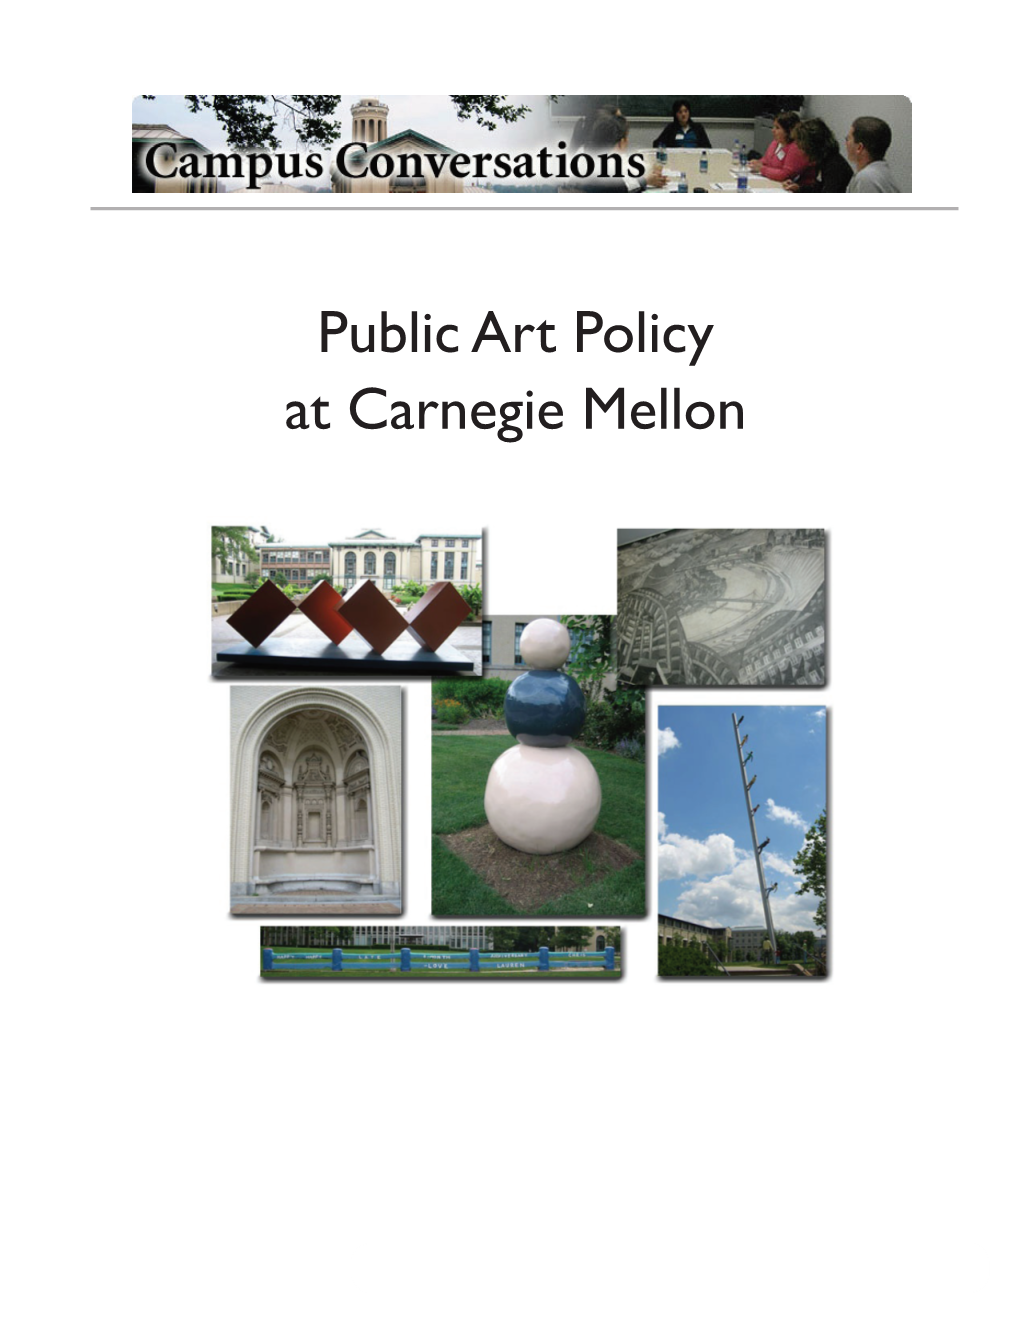 Public Art Policy at Carnegie Mellon